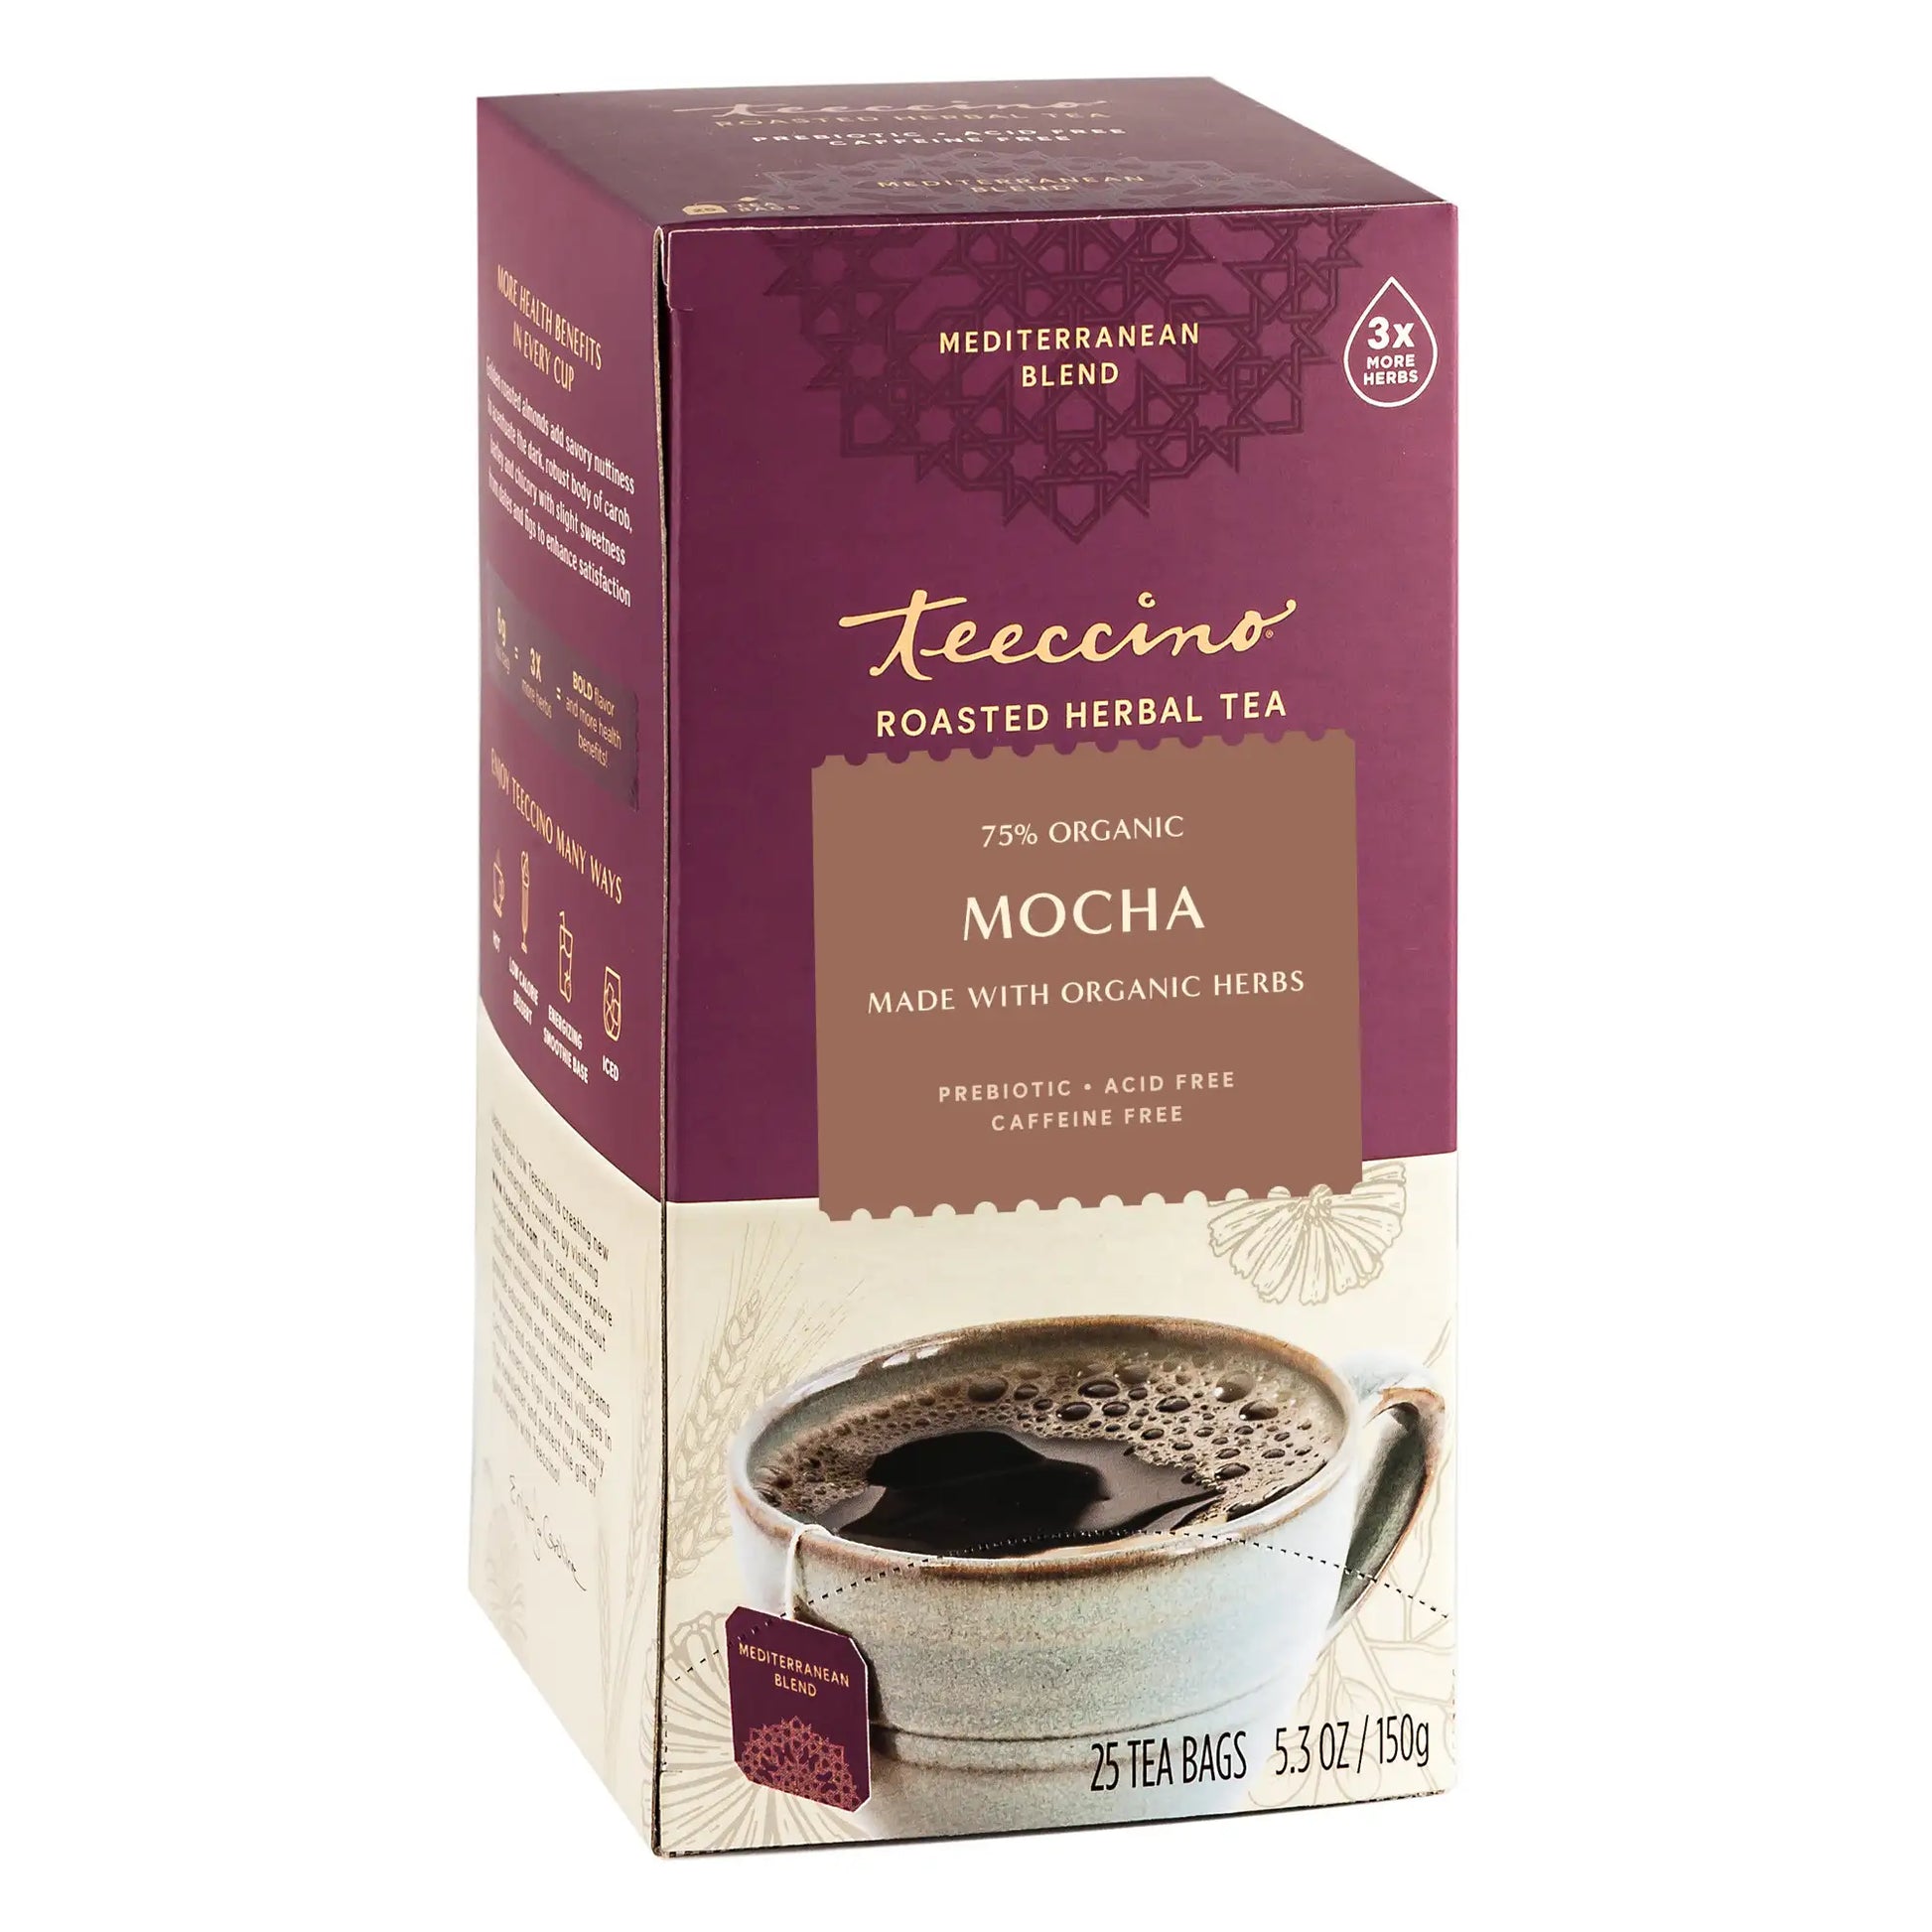 Mocha Roasted Herbal Tea